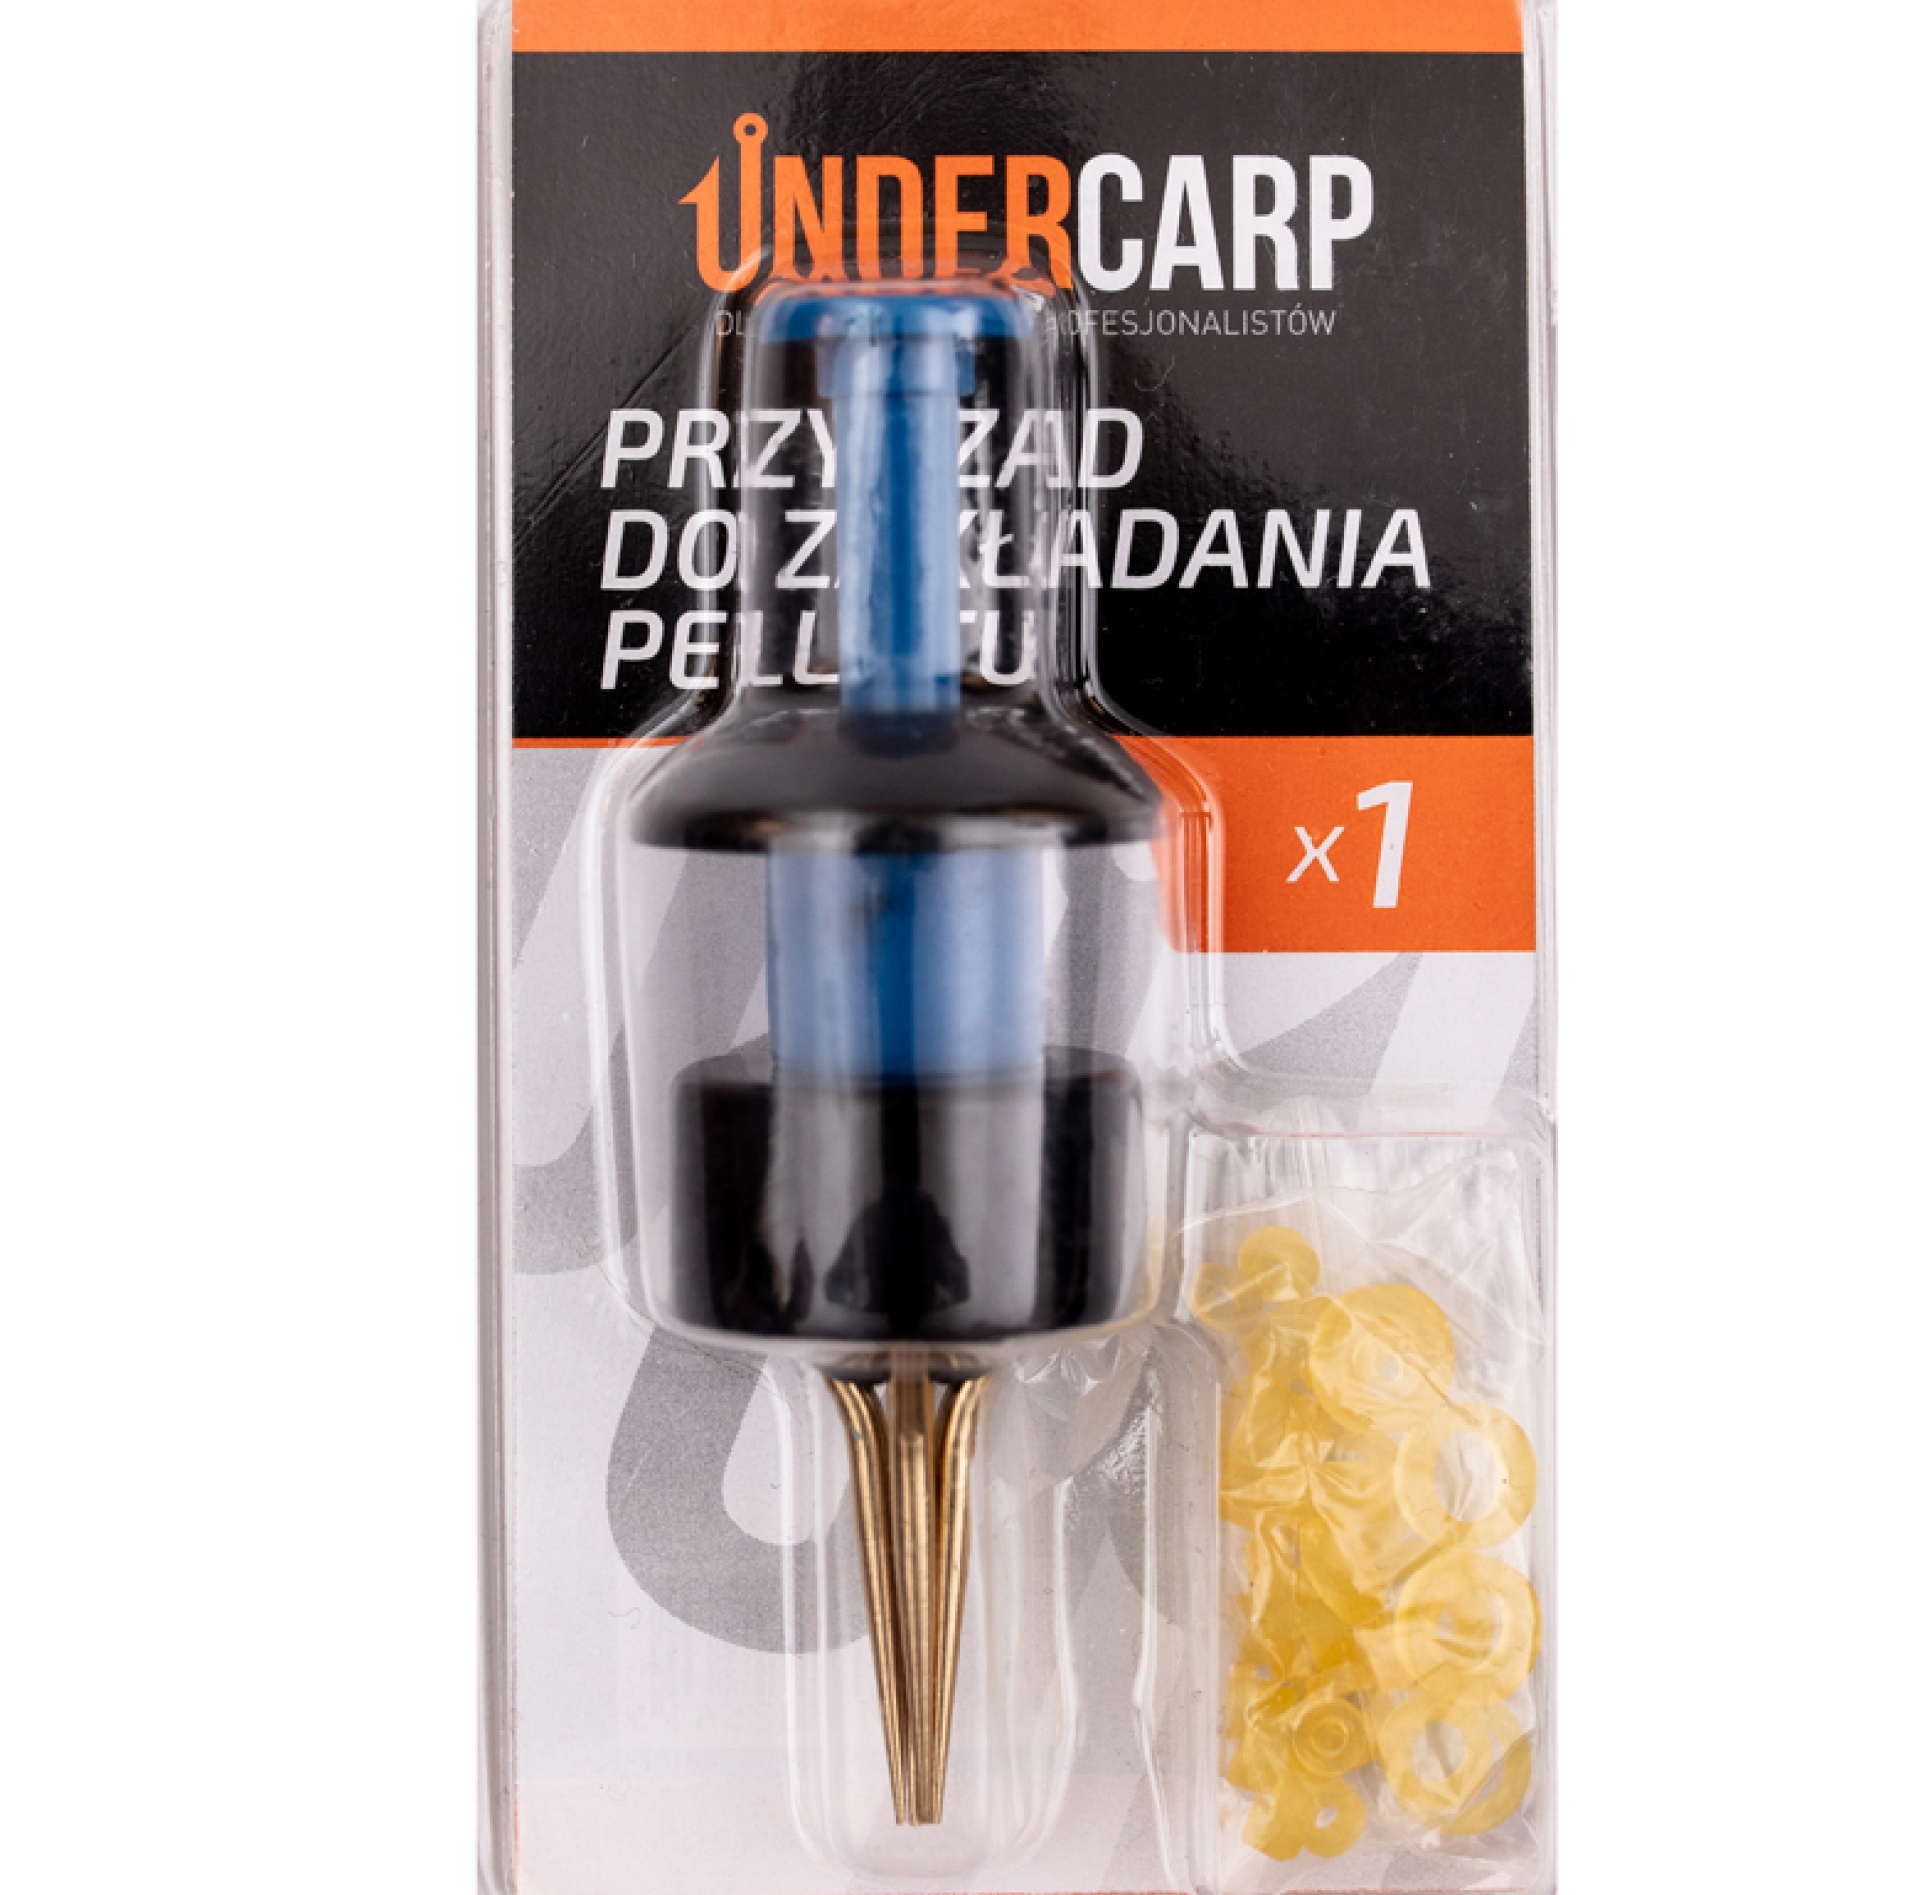 UnderCarp - Przyrząd do zakładania pelletu